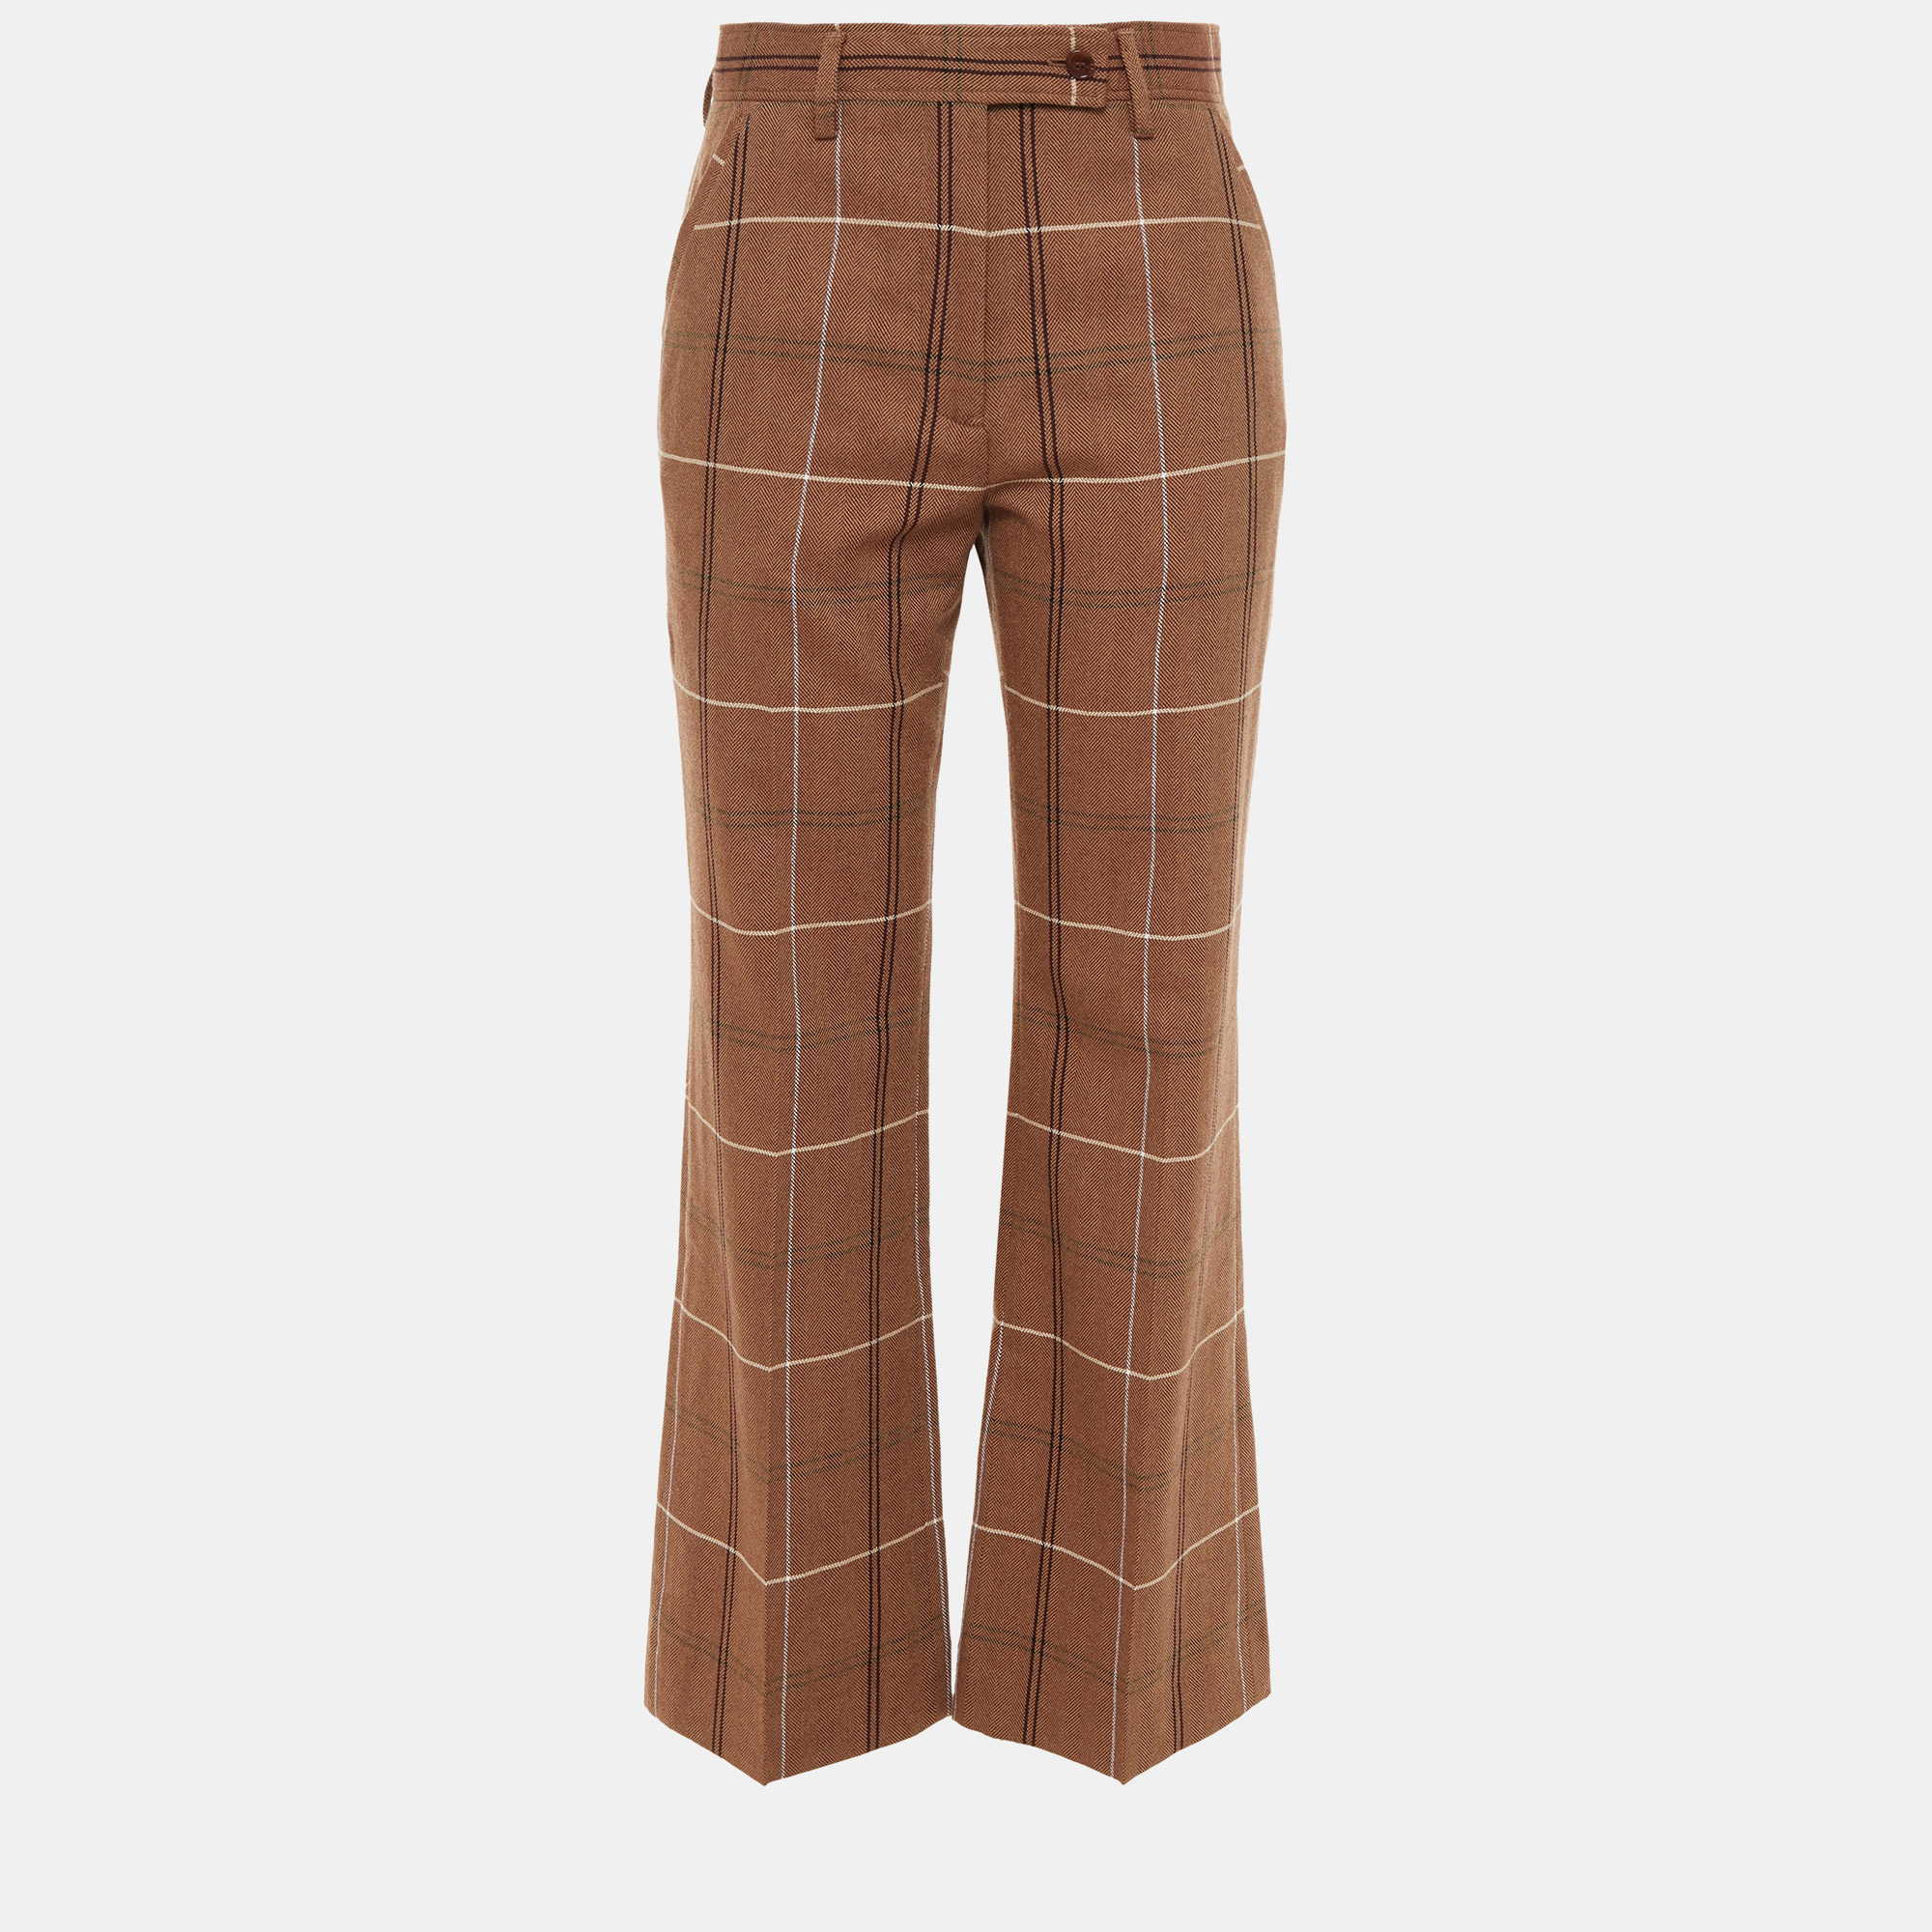 Acne studios brown checked wool straight leg pants m (eu 38)